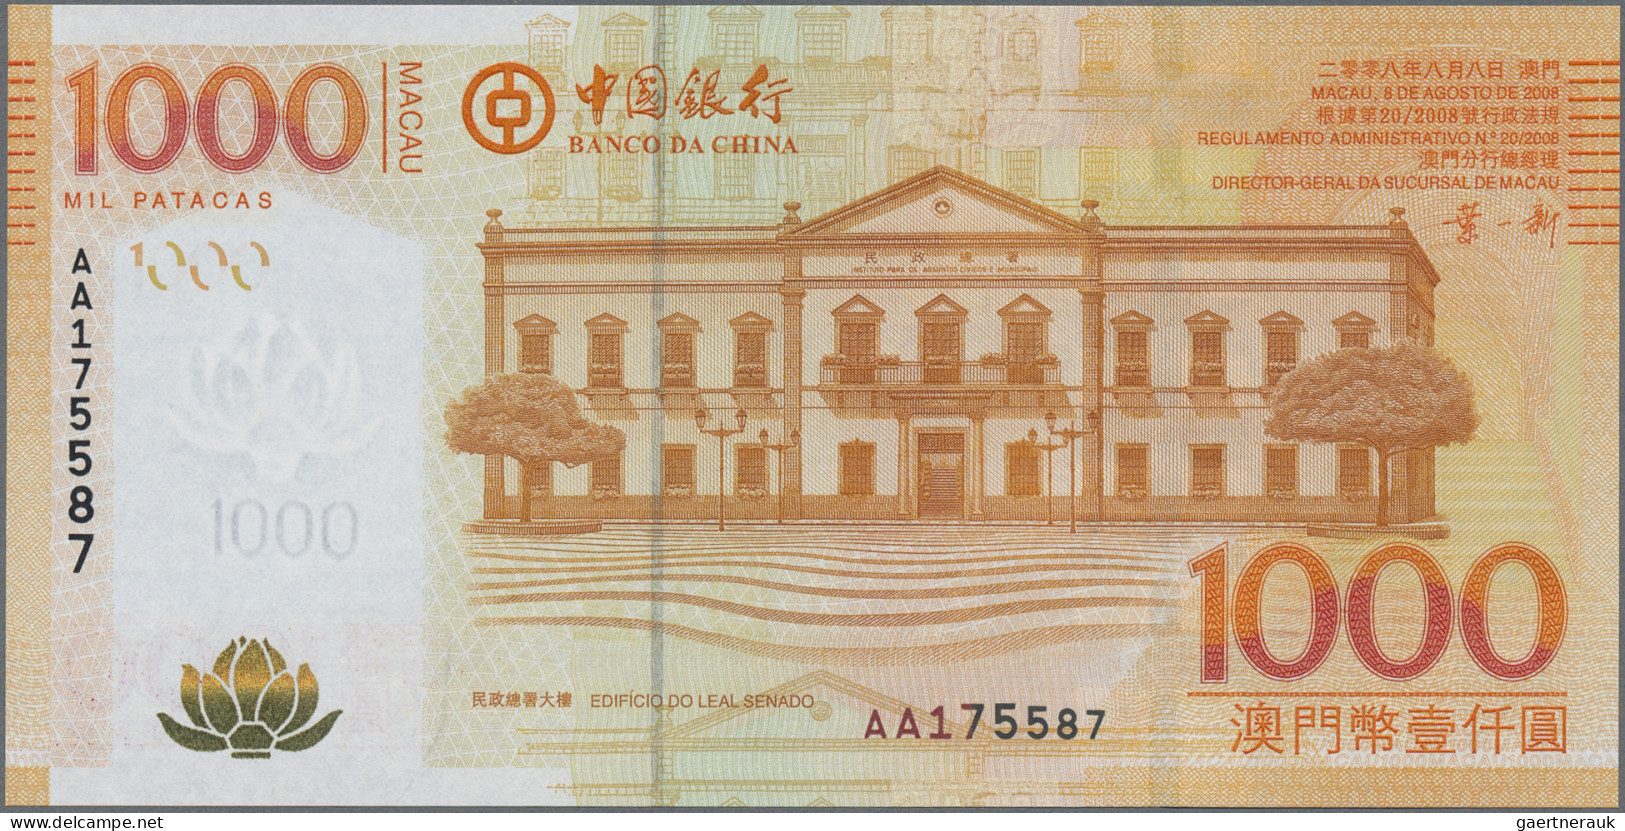 Macao: Banco da China, huge lot with 16 banknotes, series 1995-2009, comprising